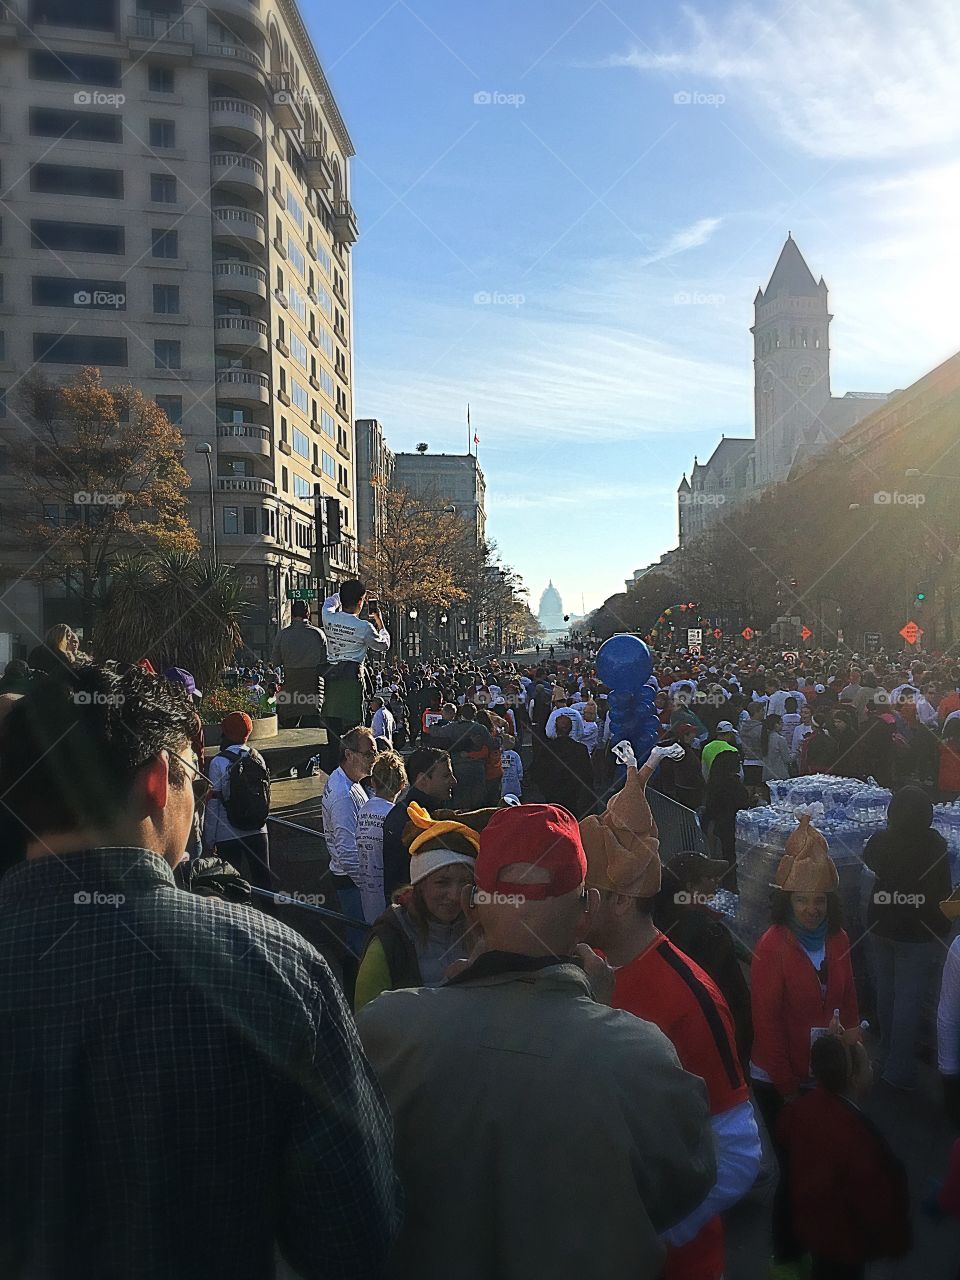 5k race, Washington, DC